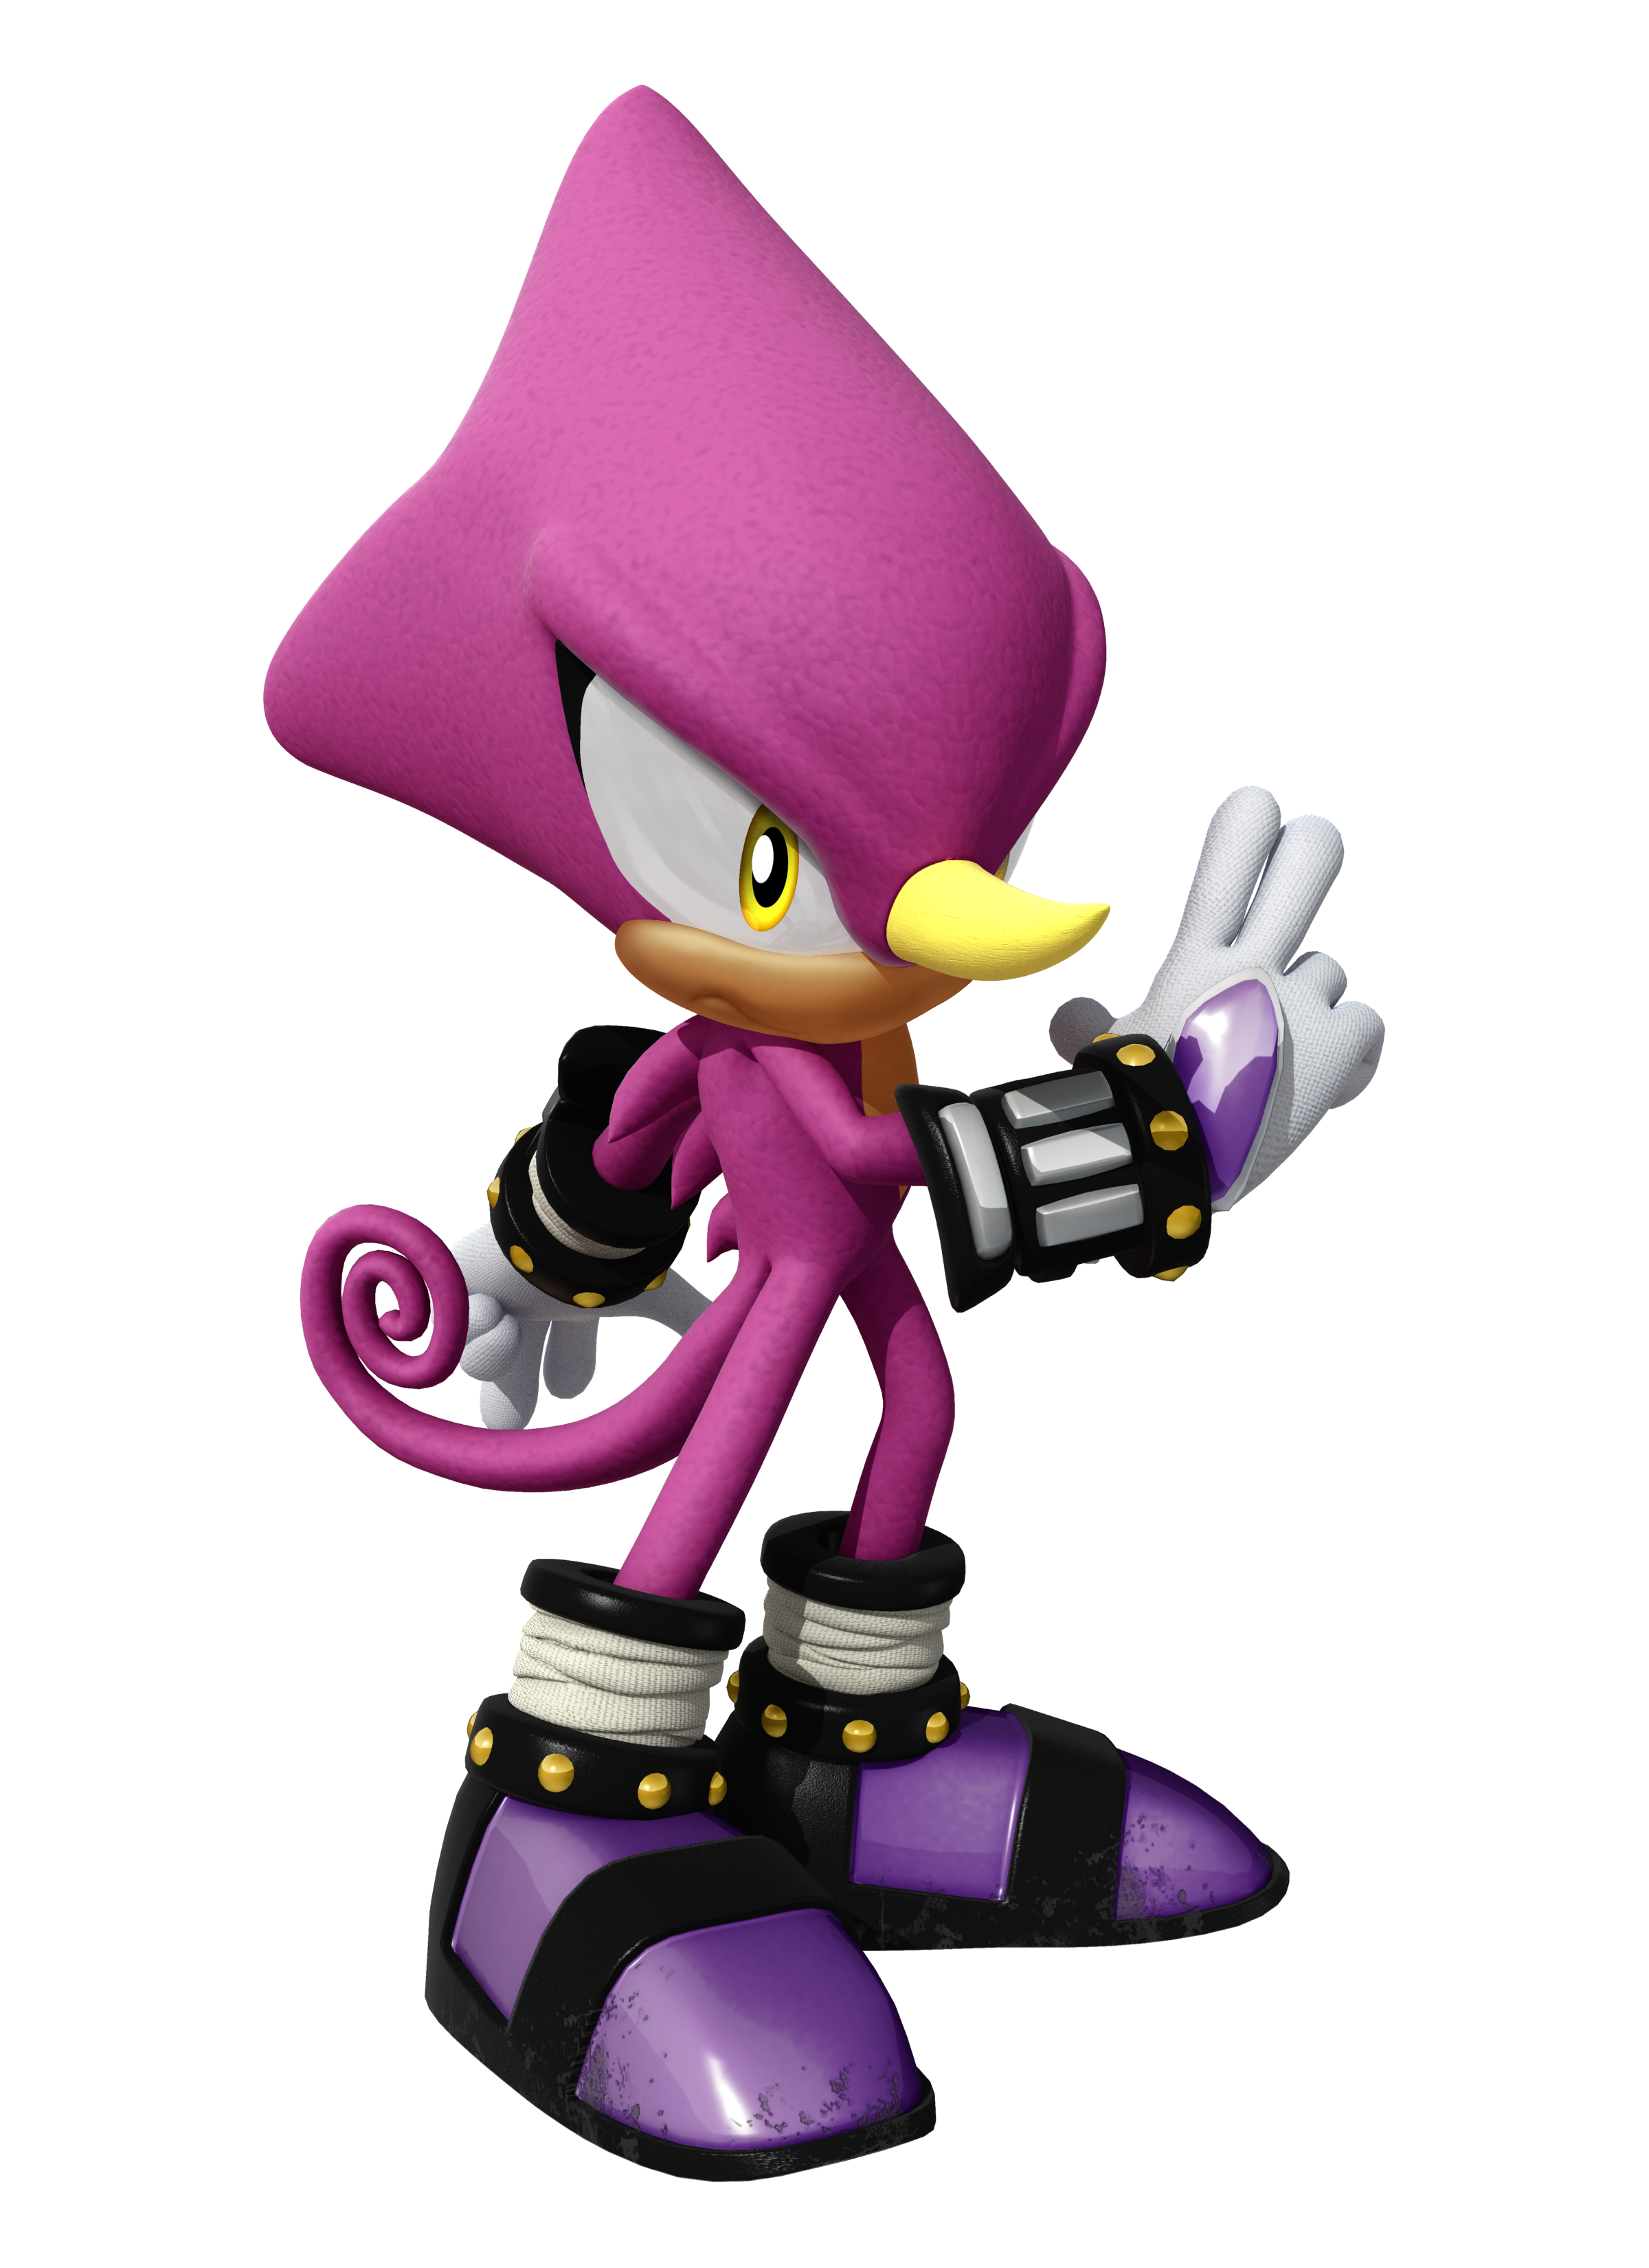 Shadow The Hedgehog Metal Sonic Espio The Chameleon Super Shadow